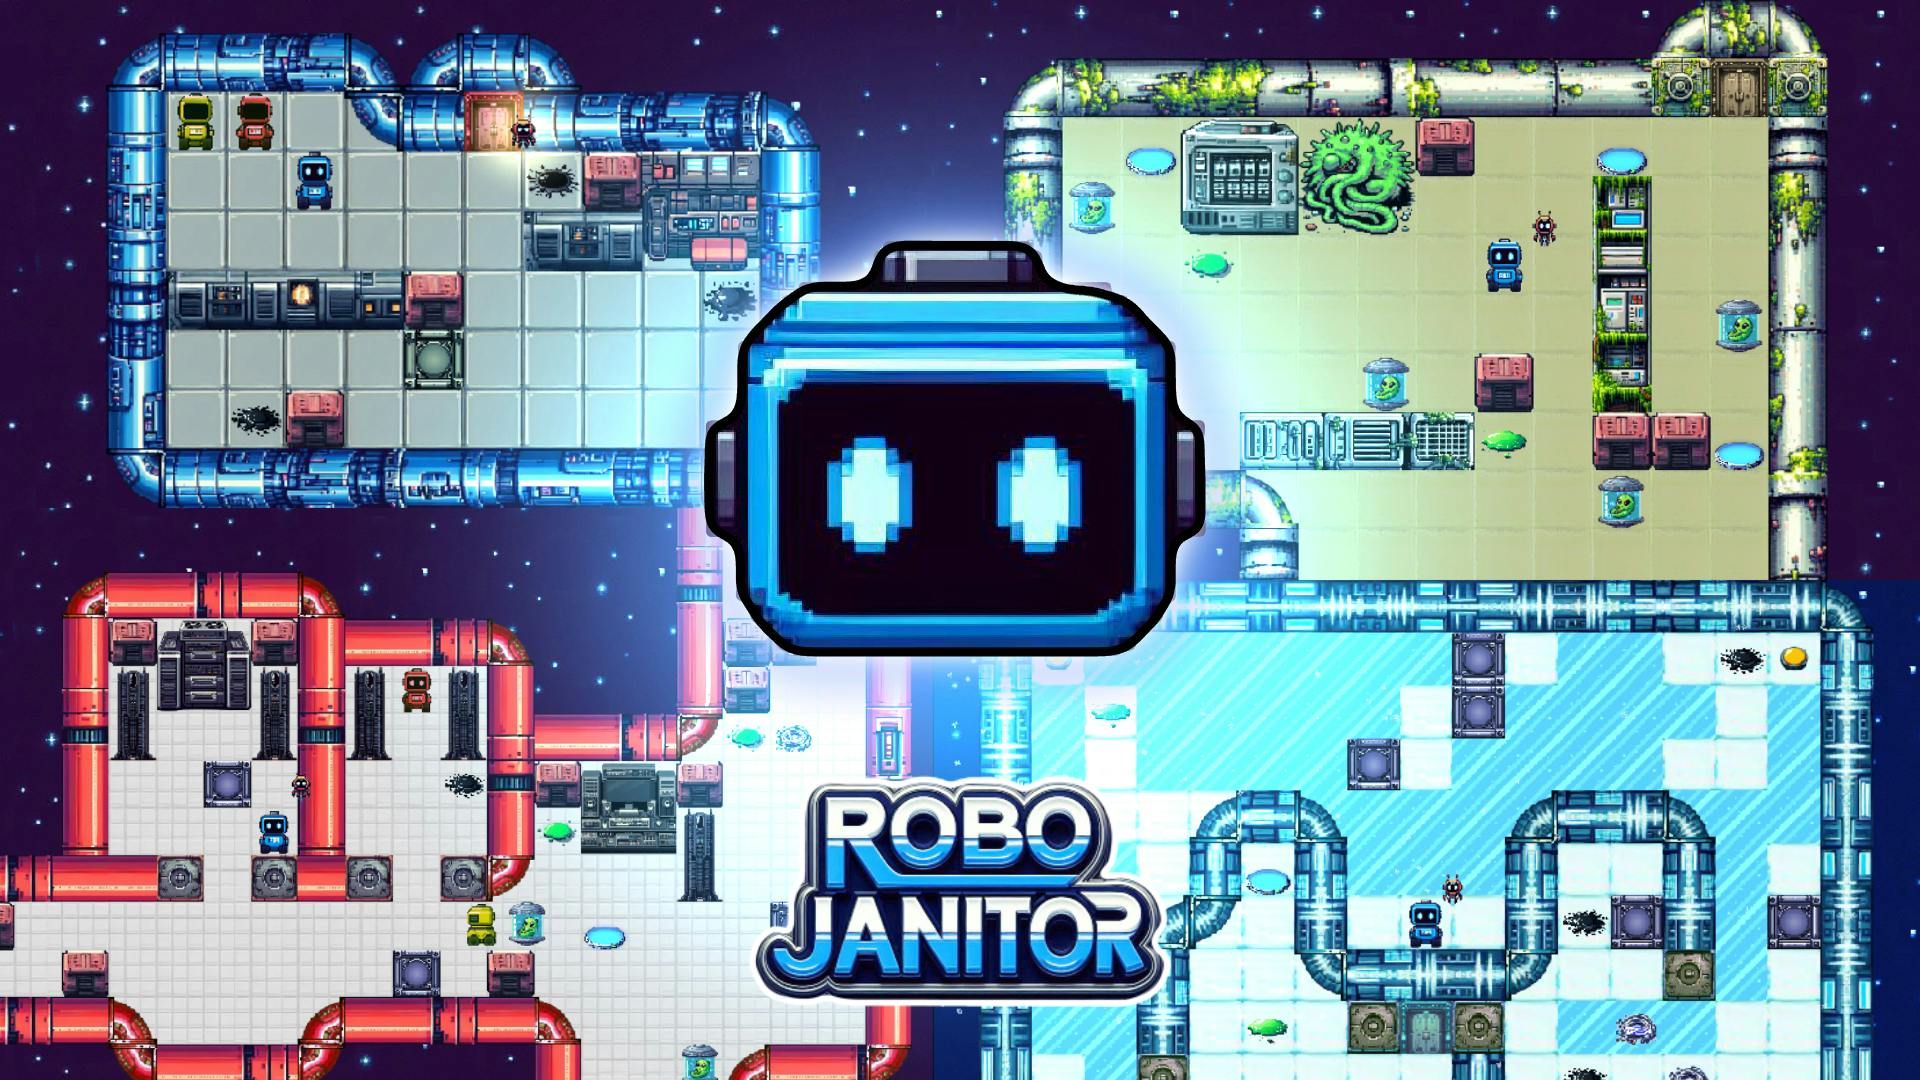 Robo Janitor - Sokobaction Space Game